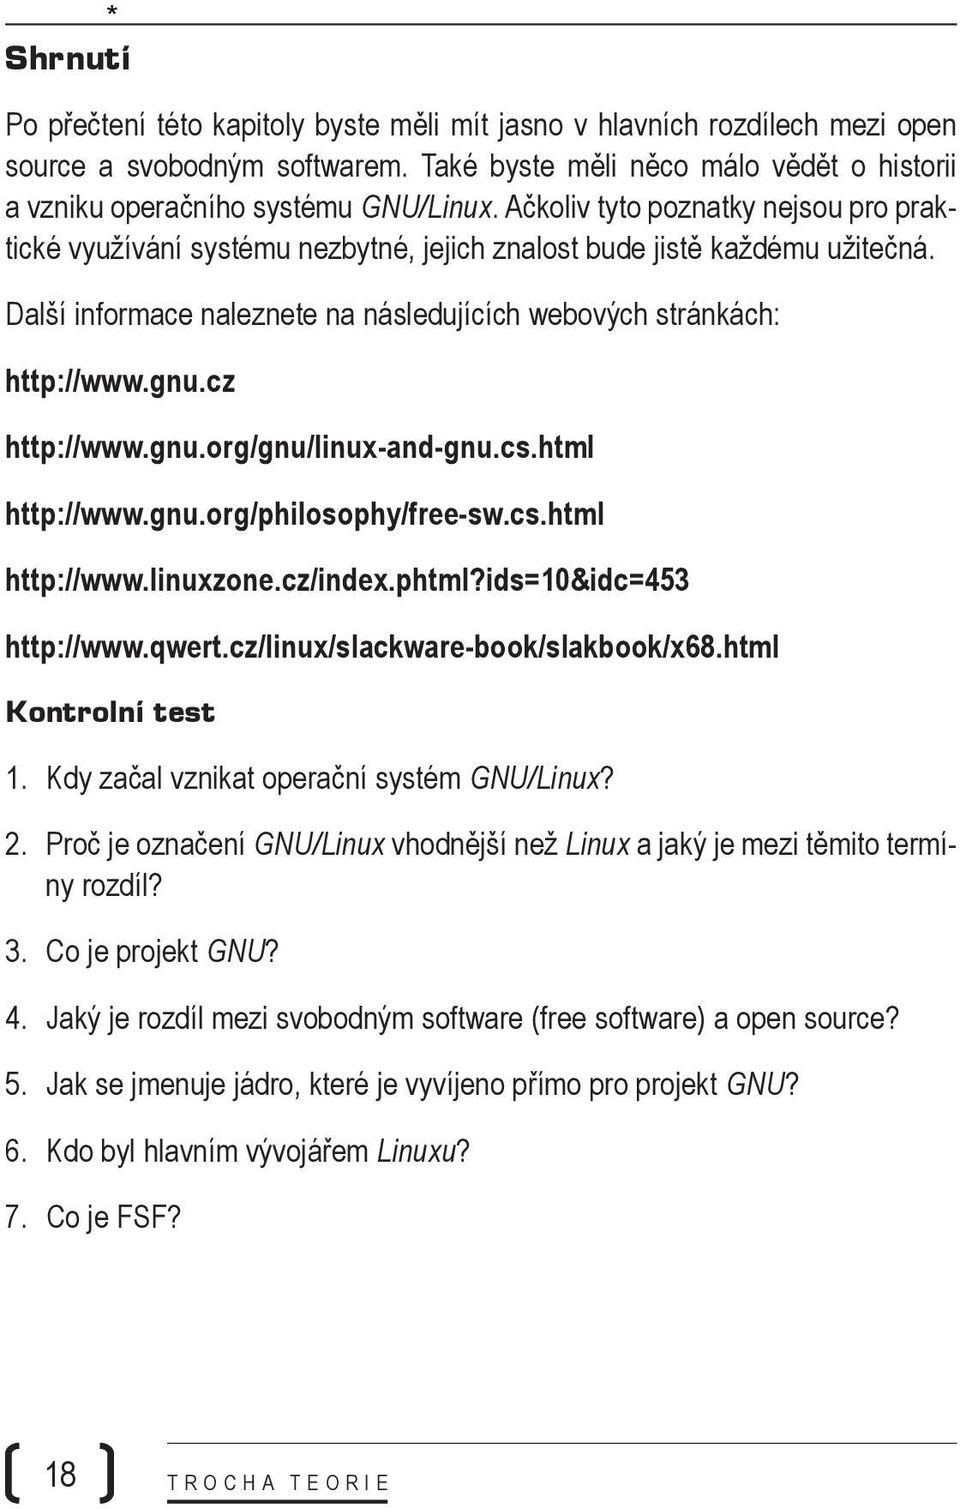 cz http://www.gnu.org/gnu/linux-and-gnu.cs.html http://www.gnu.org/philosophy/free-sw.cs.html http://www.linuxzone.cz/index.phtml?ids=10&idc=453 http://www.qwert.cz/linux/slackware-book/slakbook/x68.